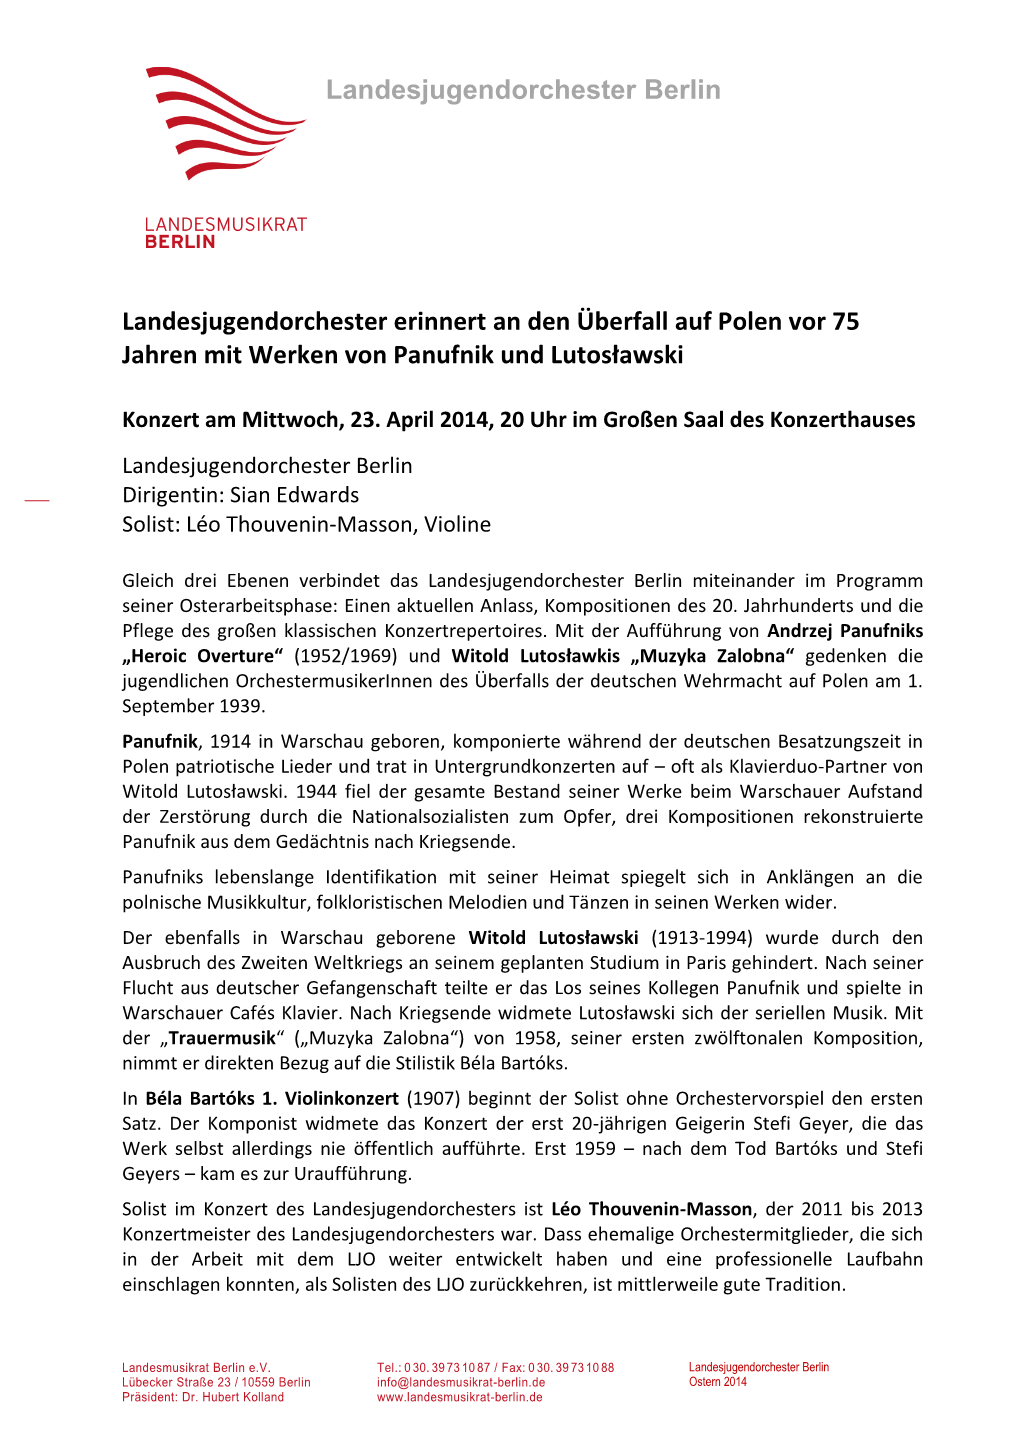 Pressetext Zum LJO-Konzert Am 23. April 2014